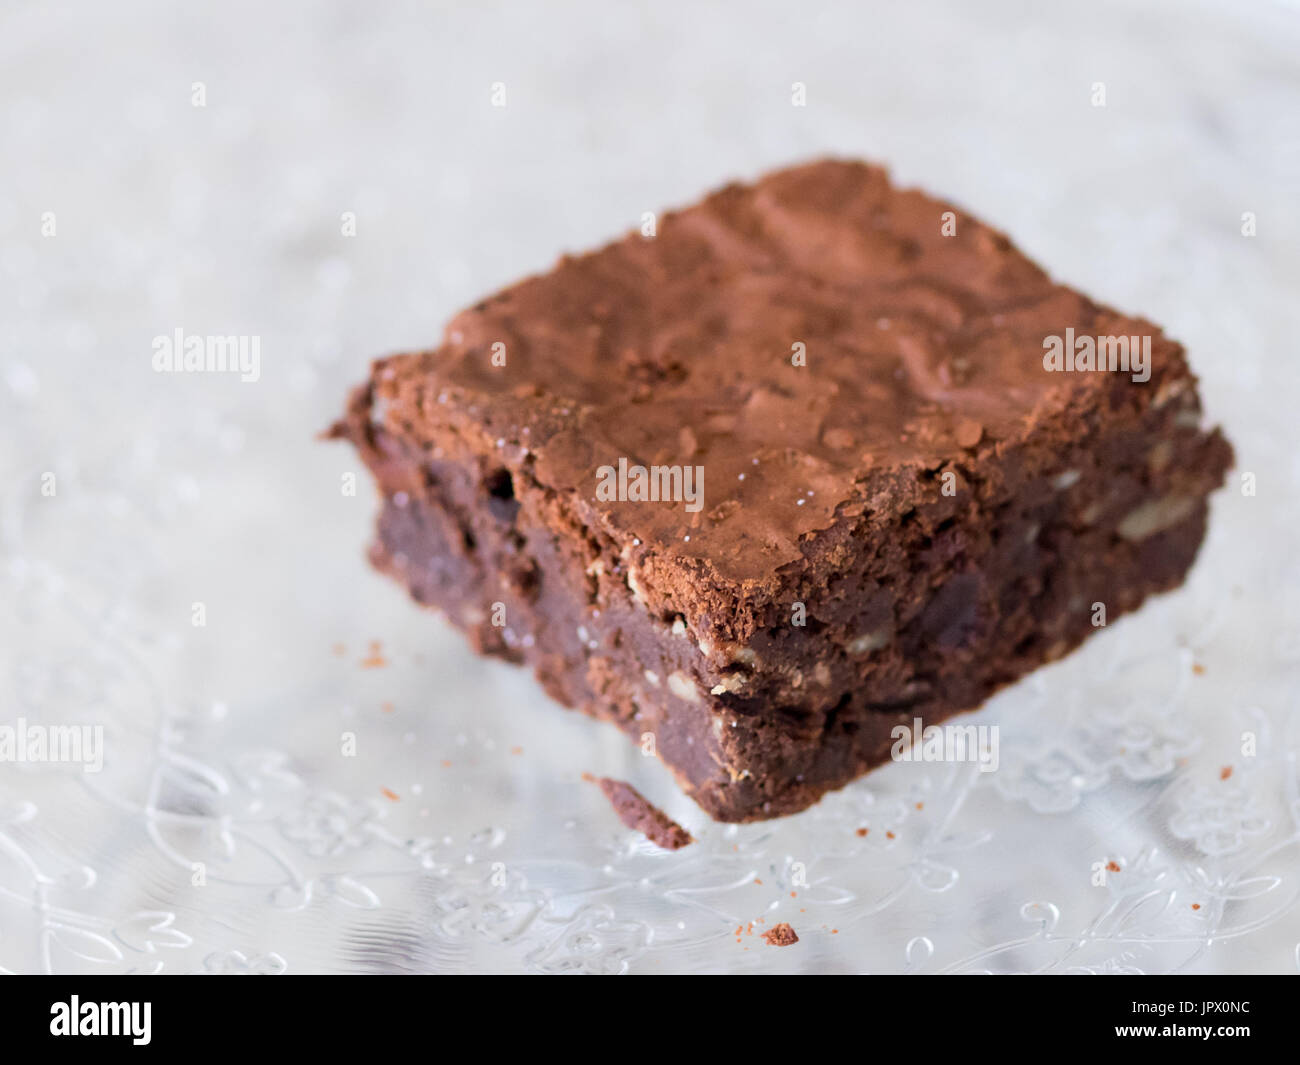 A chocolate fudge brownie. Stock Photo